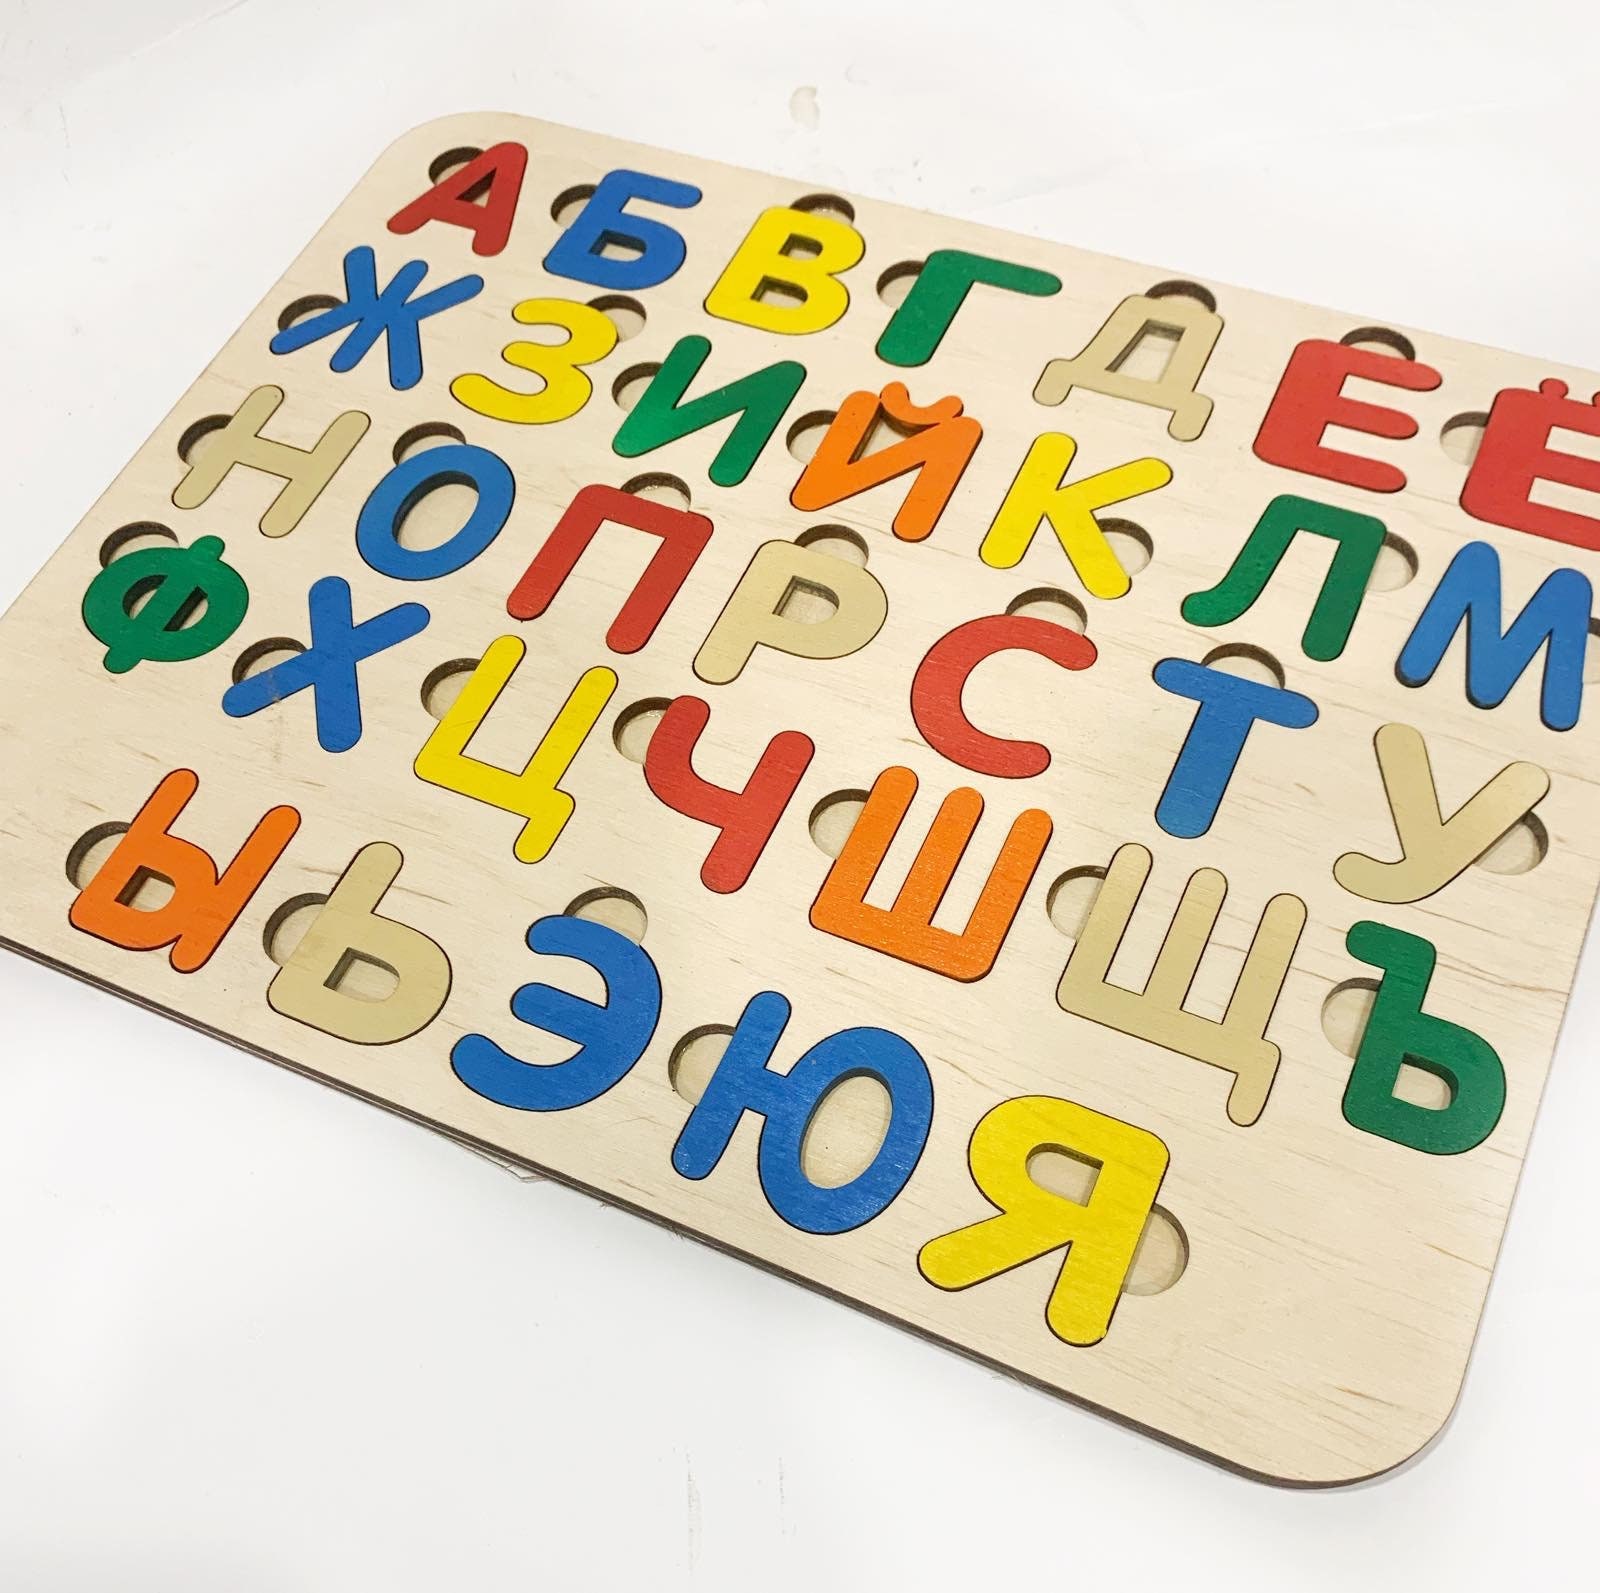 33 styles Alphabet Lore Russian Alphabet Lore Plush Toy Stuffed